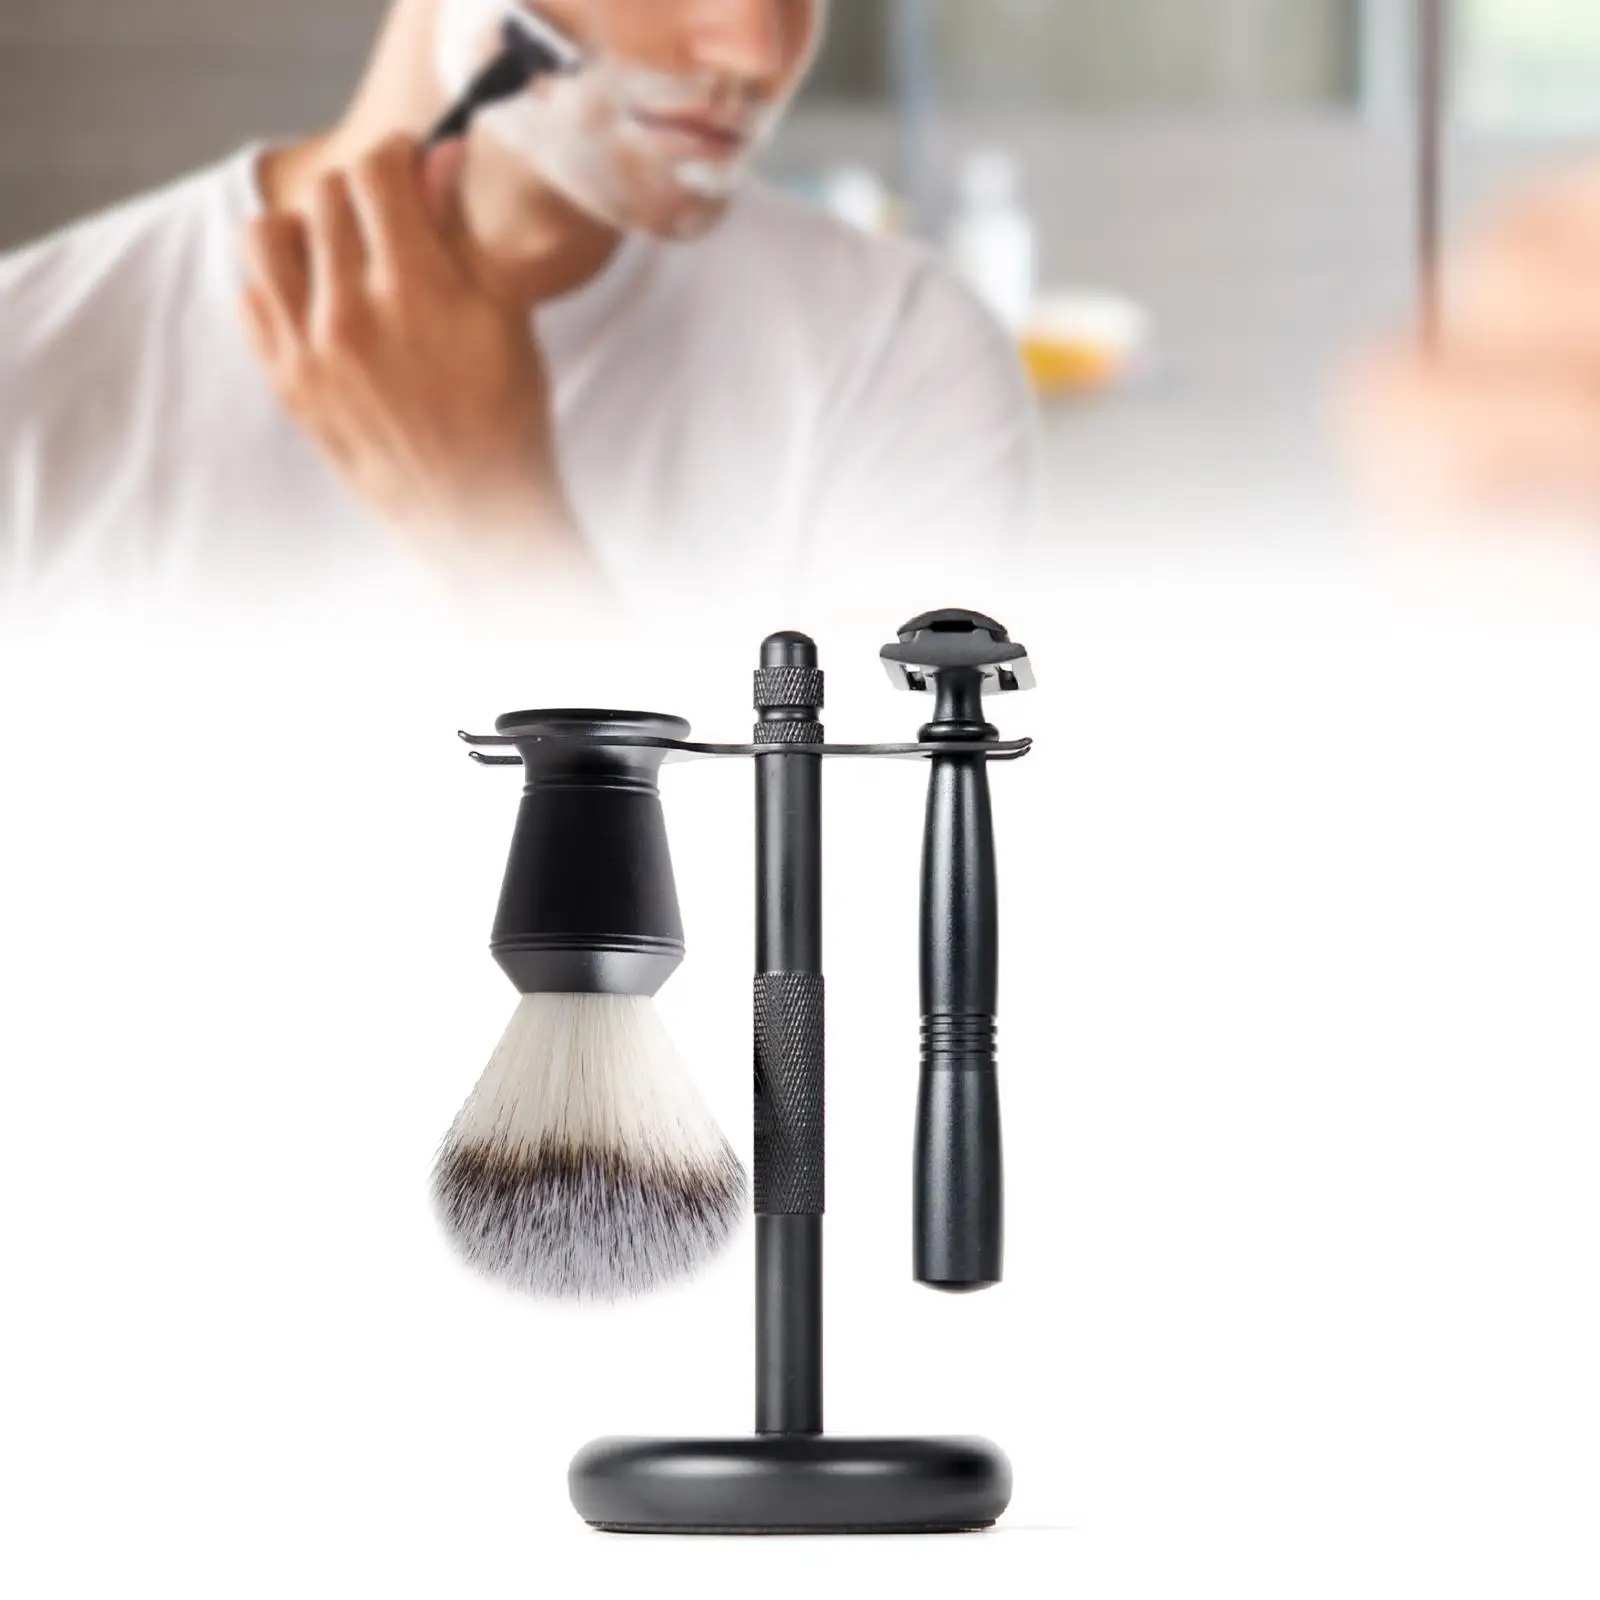 3 Pieces Shaving Kit Black Elegant Shaving Brush Stand Set Includes Edge Razor, Holder, Shaving Brush Luxury Shave Accessory